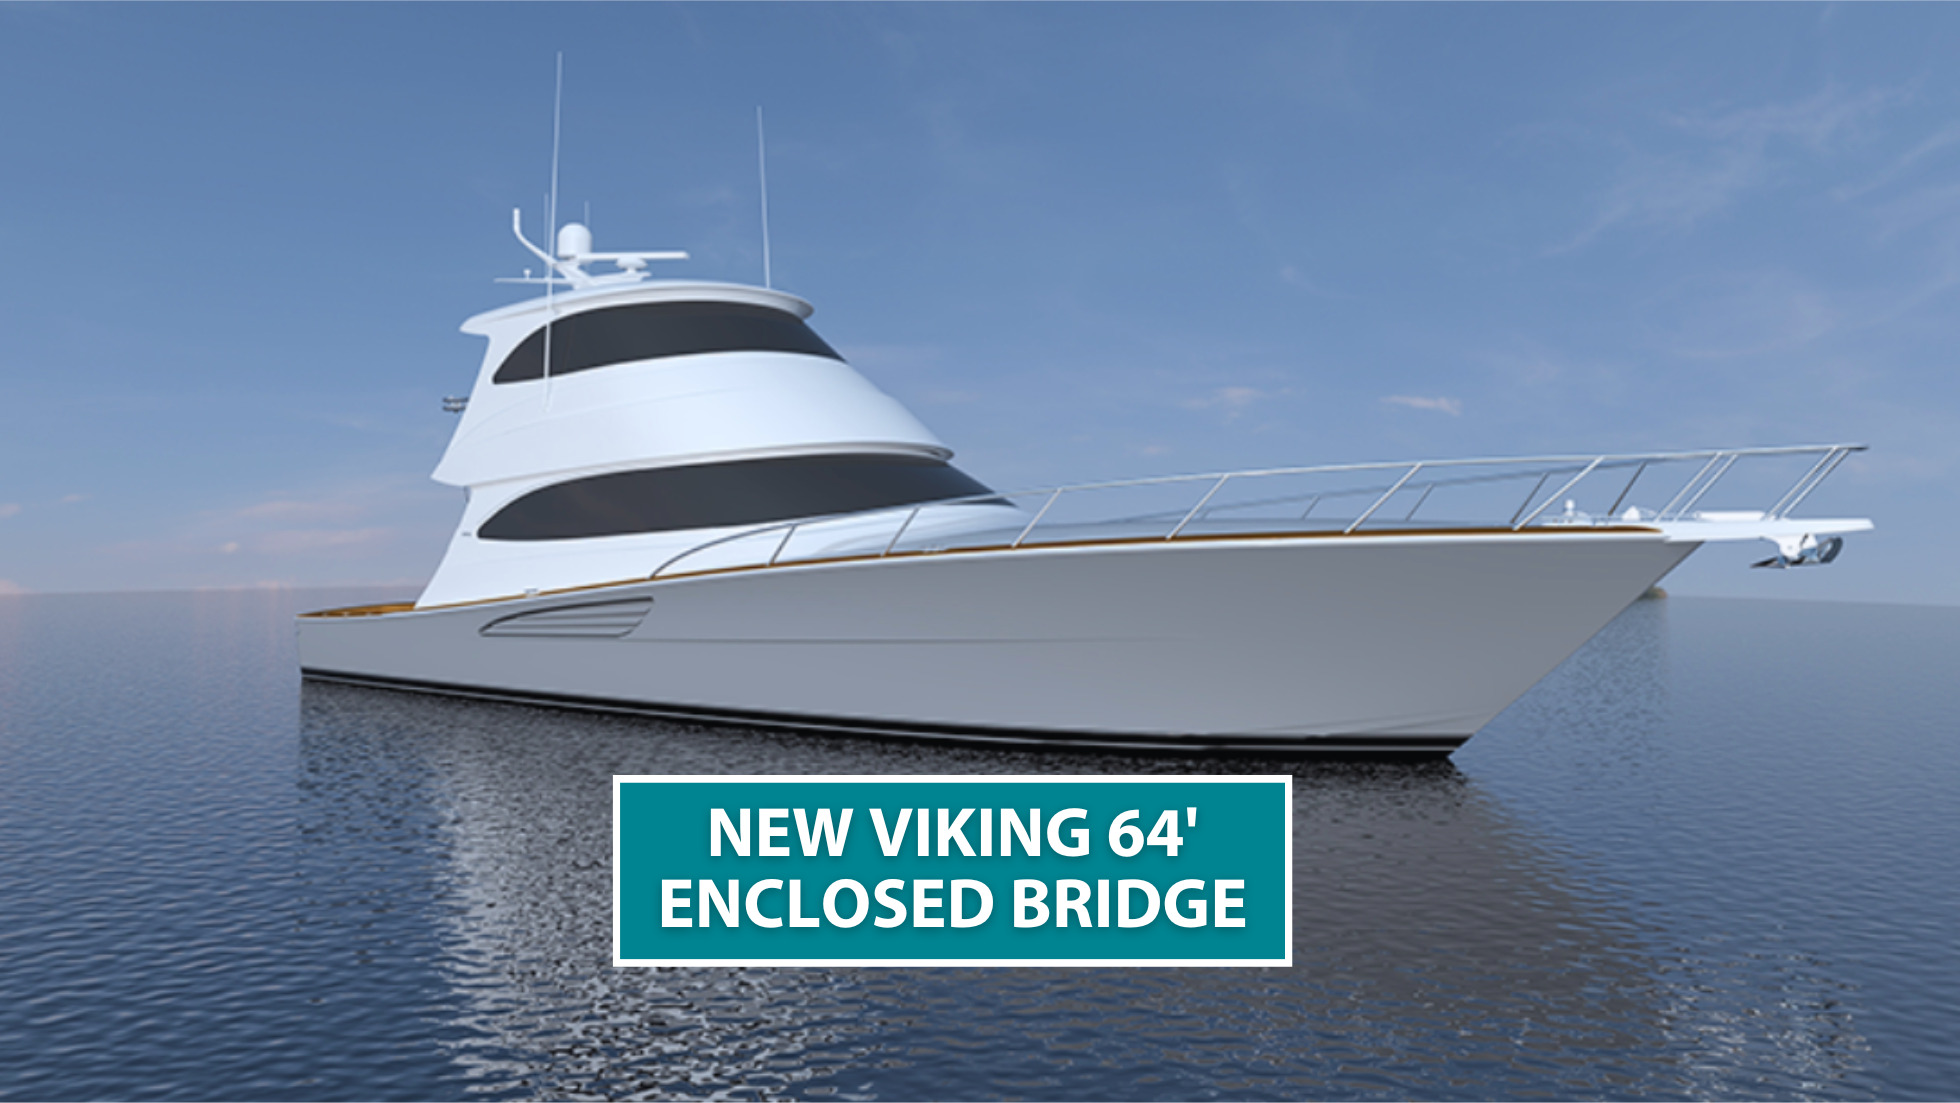 Enclosure Disclosure – New Viking 64′ Enclosed Bridge